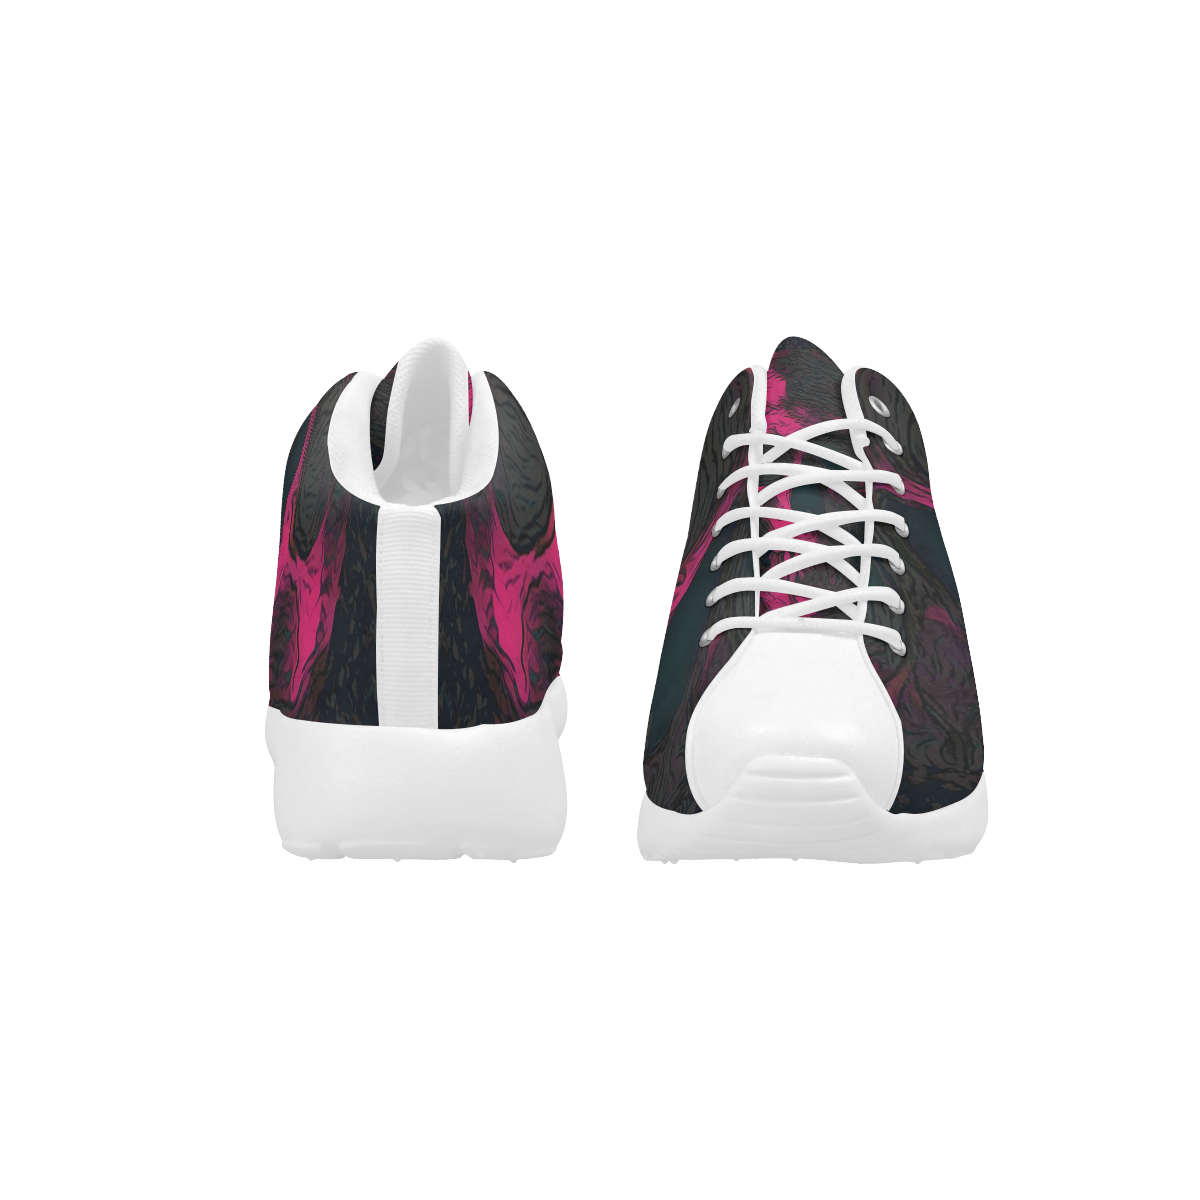 ART SKULL PINK LADYLIKE SPORT Women's Basketball Training Shoes (Model 47502)